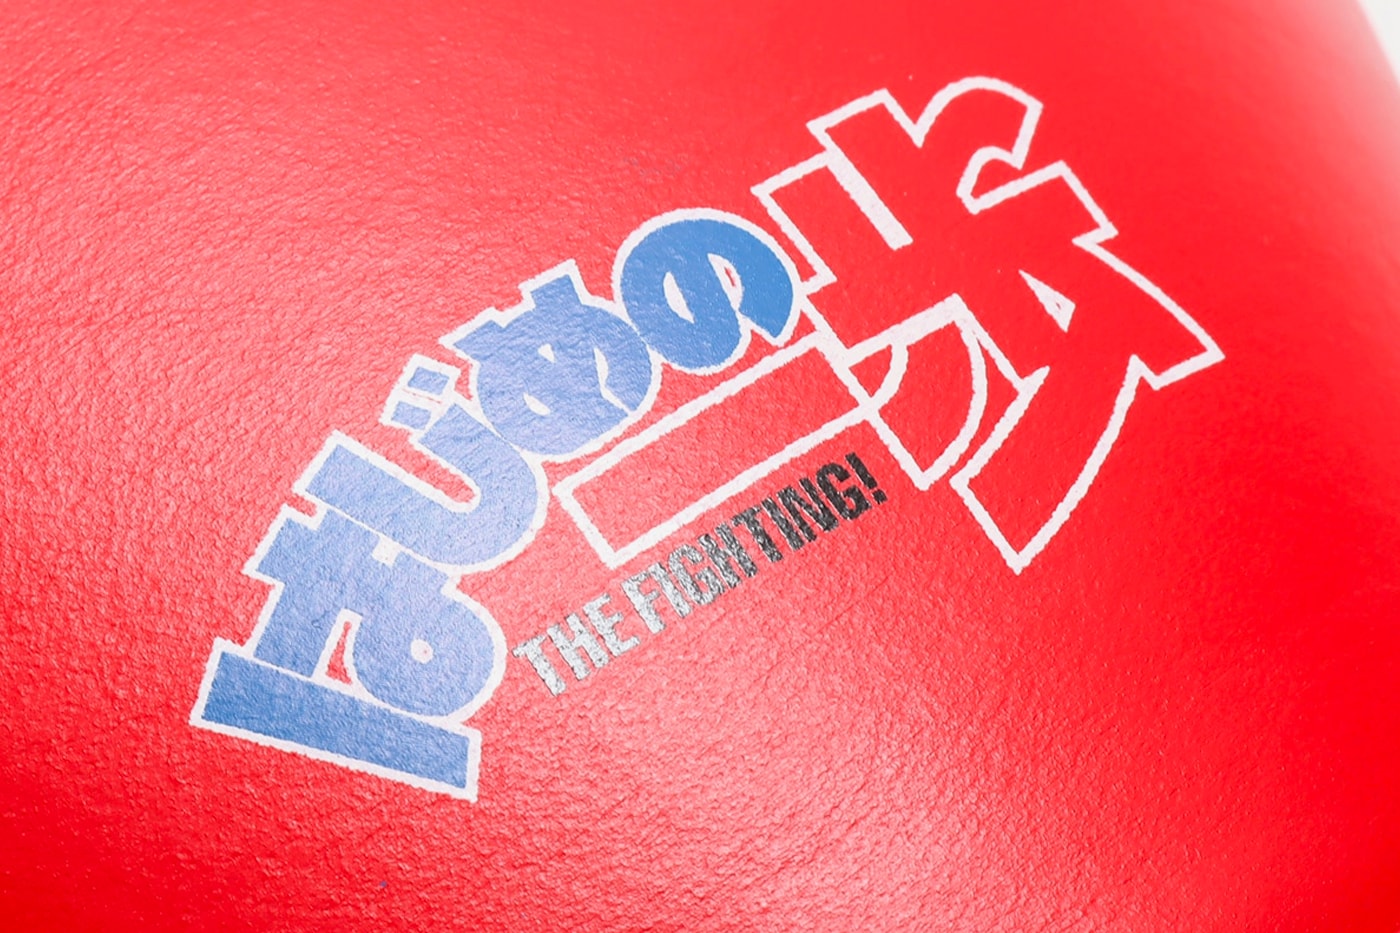 atmos EVERLAST Hajime no Ippo Capsule Collection boxing sports anime manga George Morikawa shonen Release Info Date 